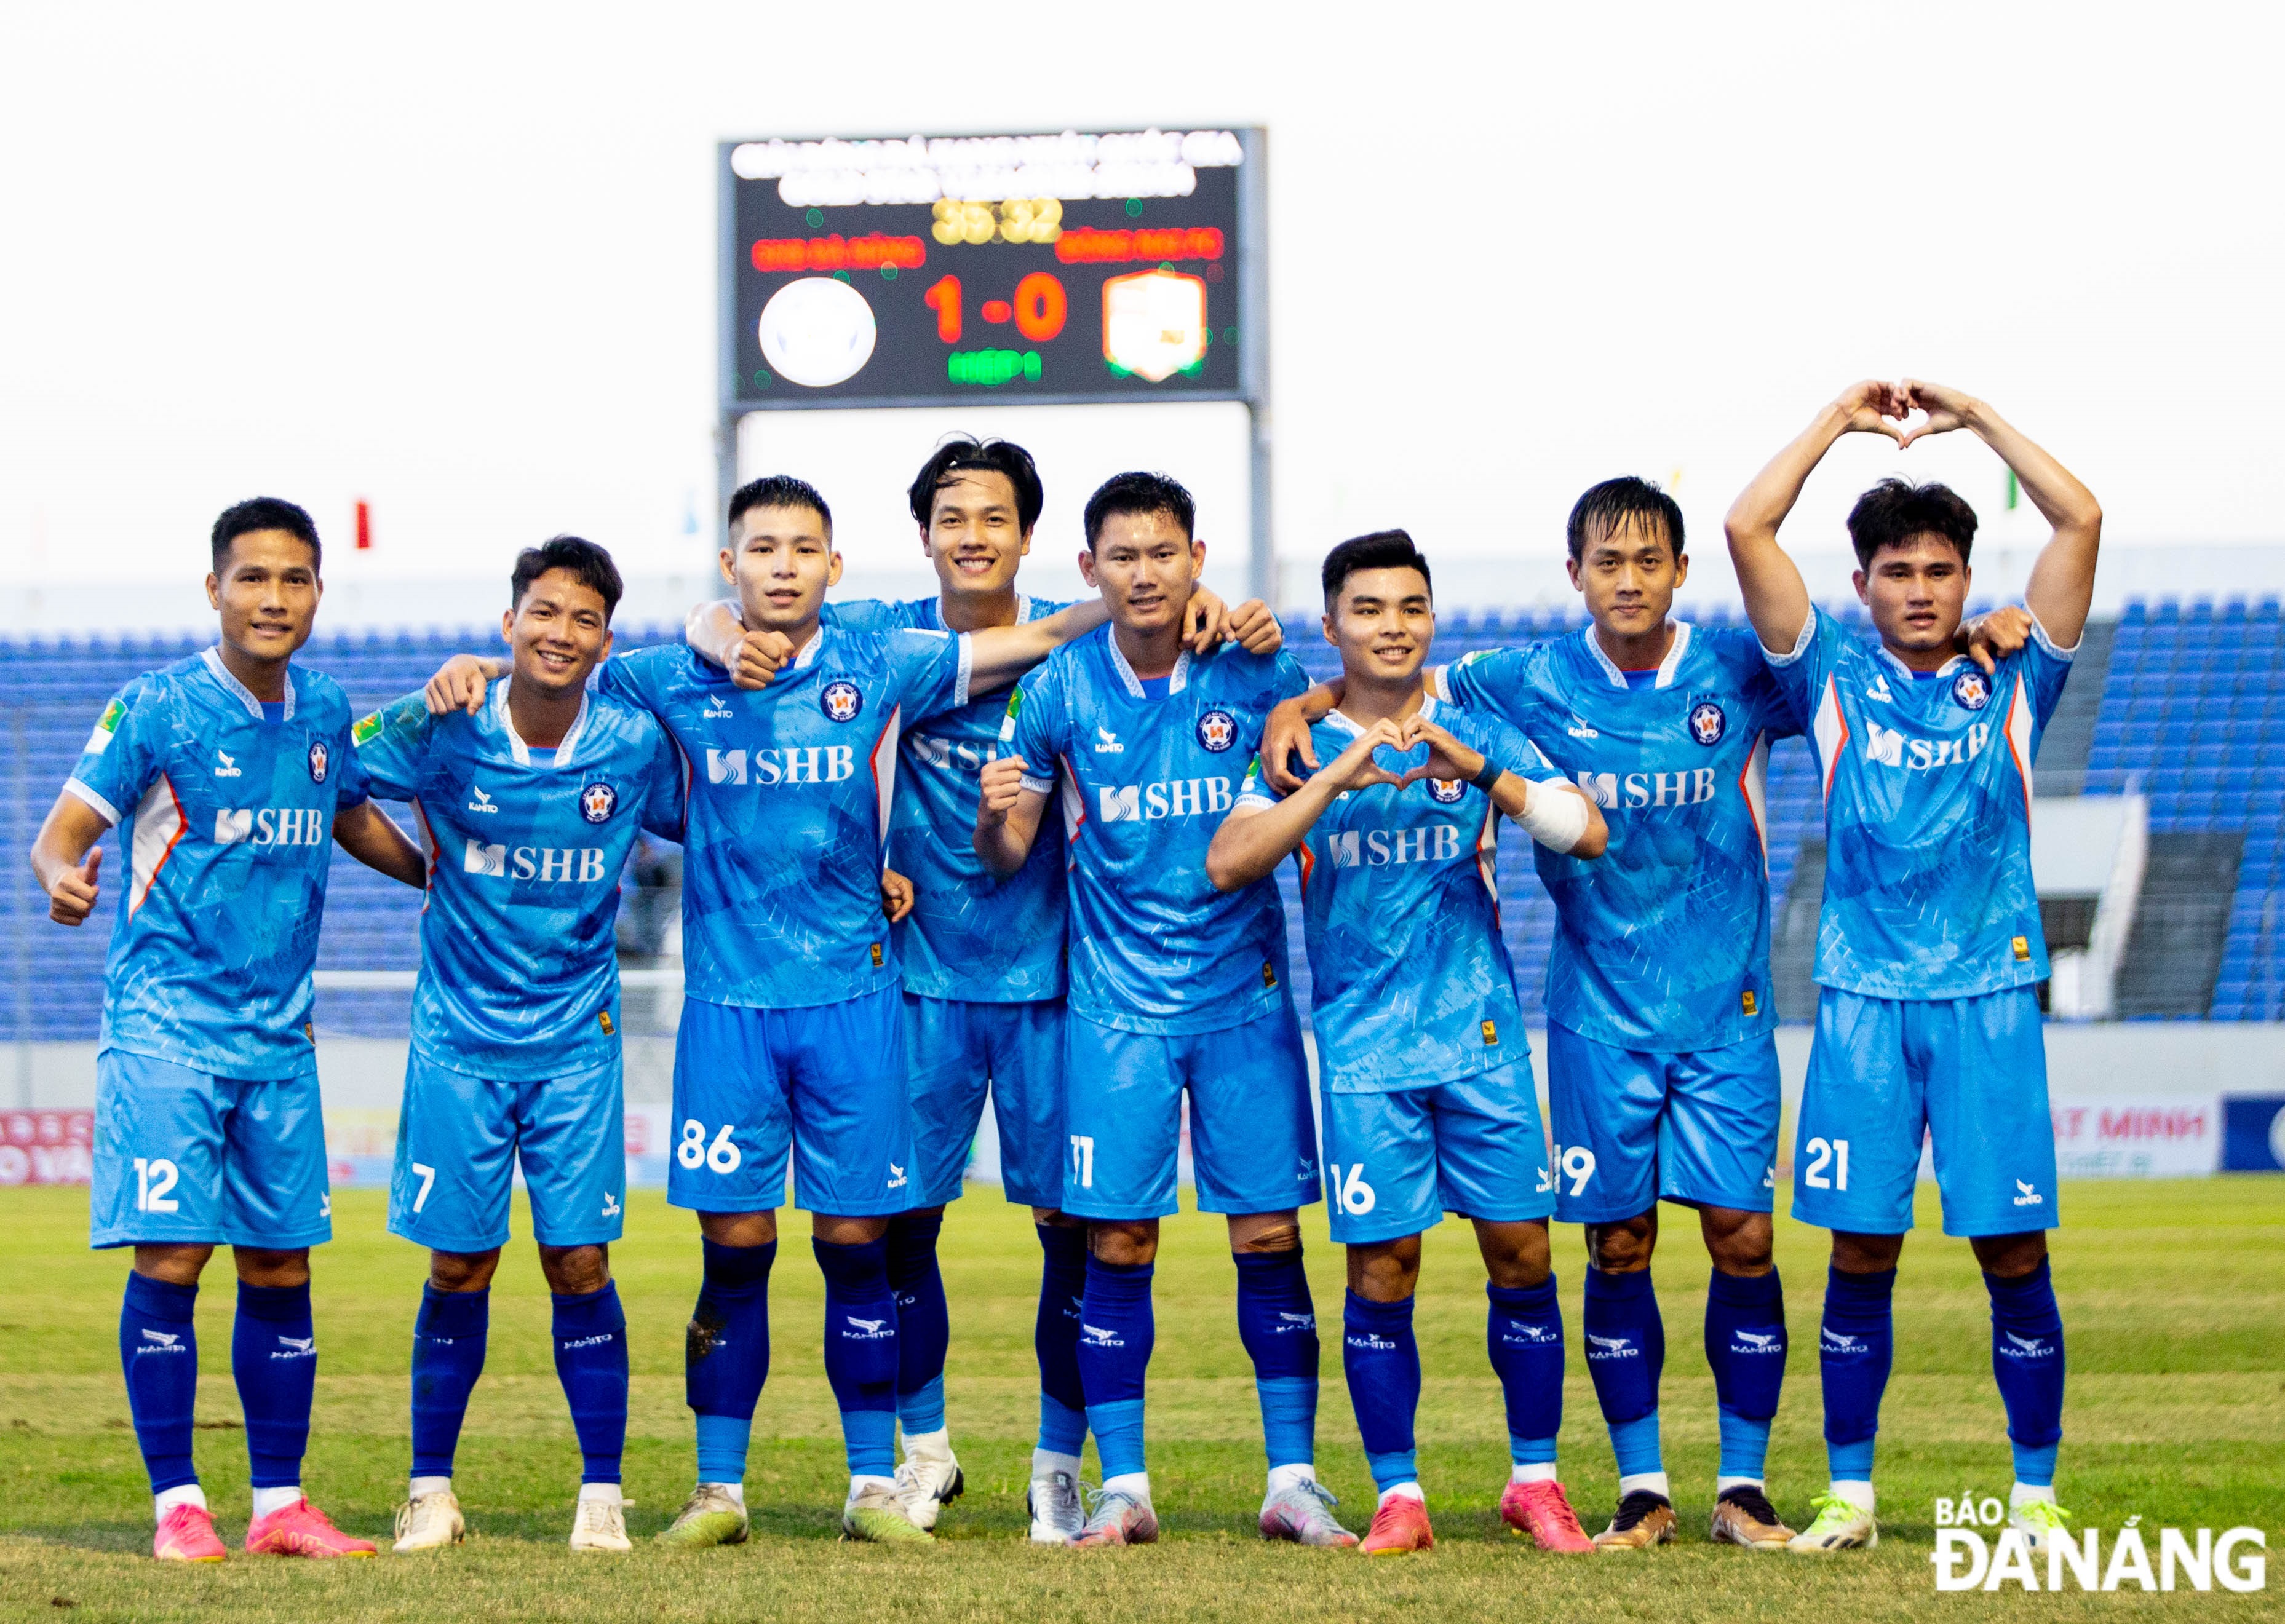 SHB Da Nang players celebrate the victory together